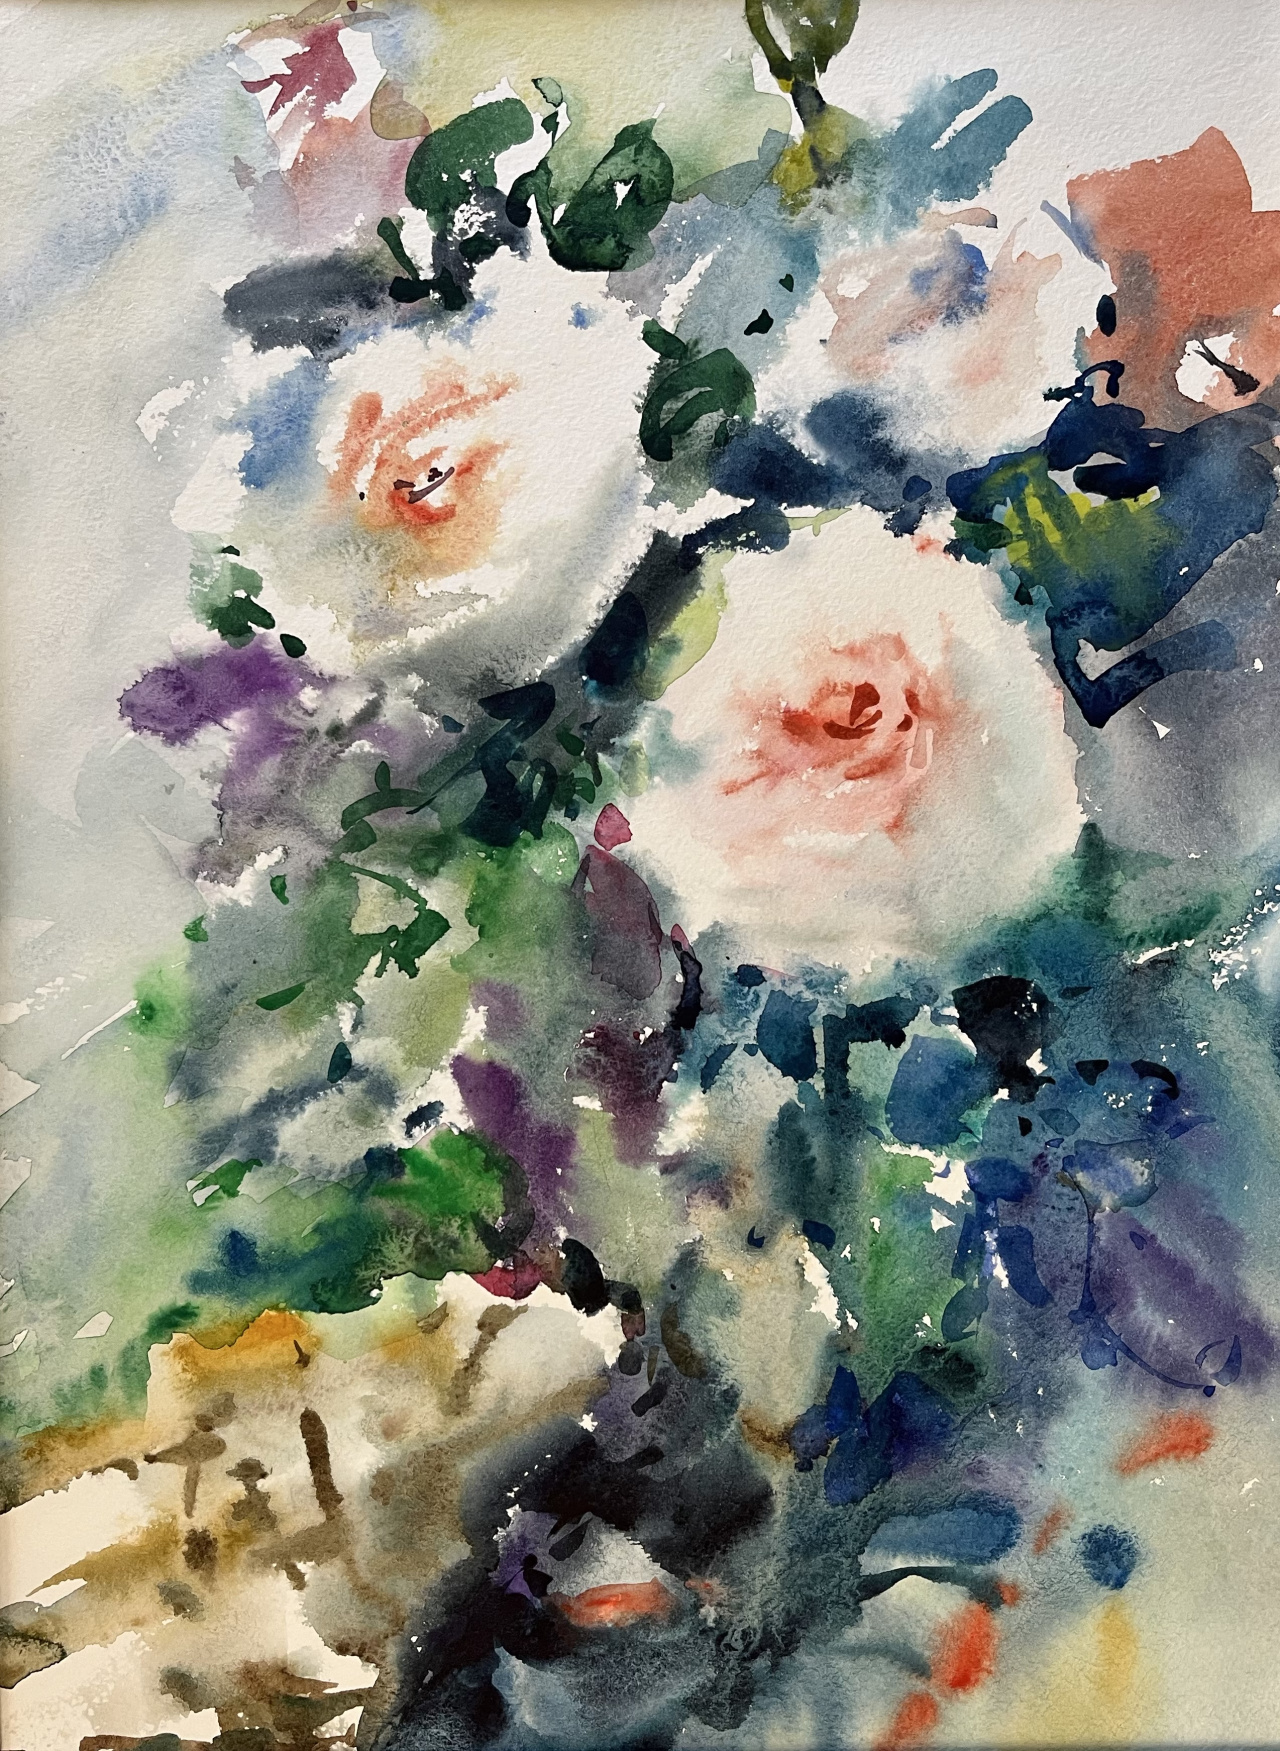 Картина Белые розы